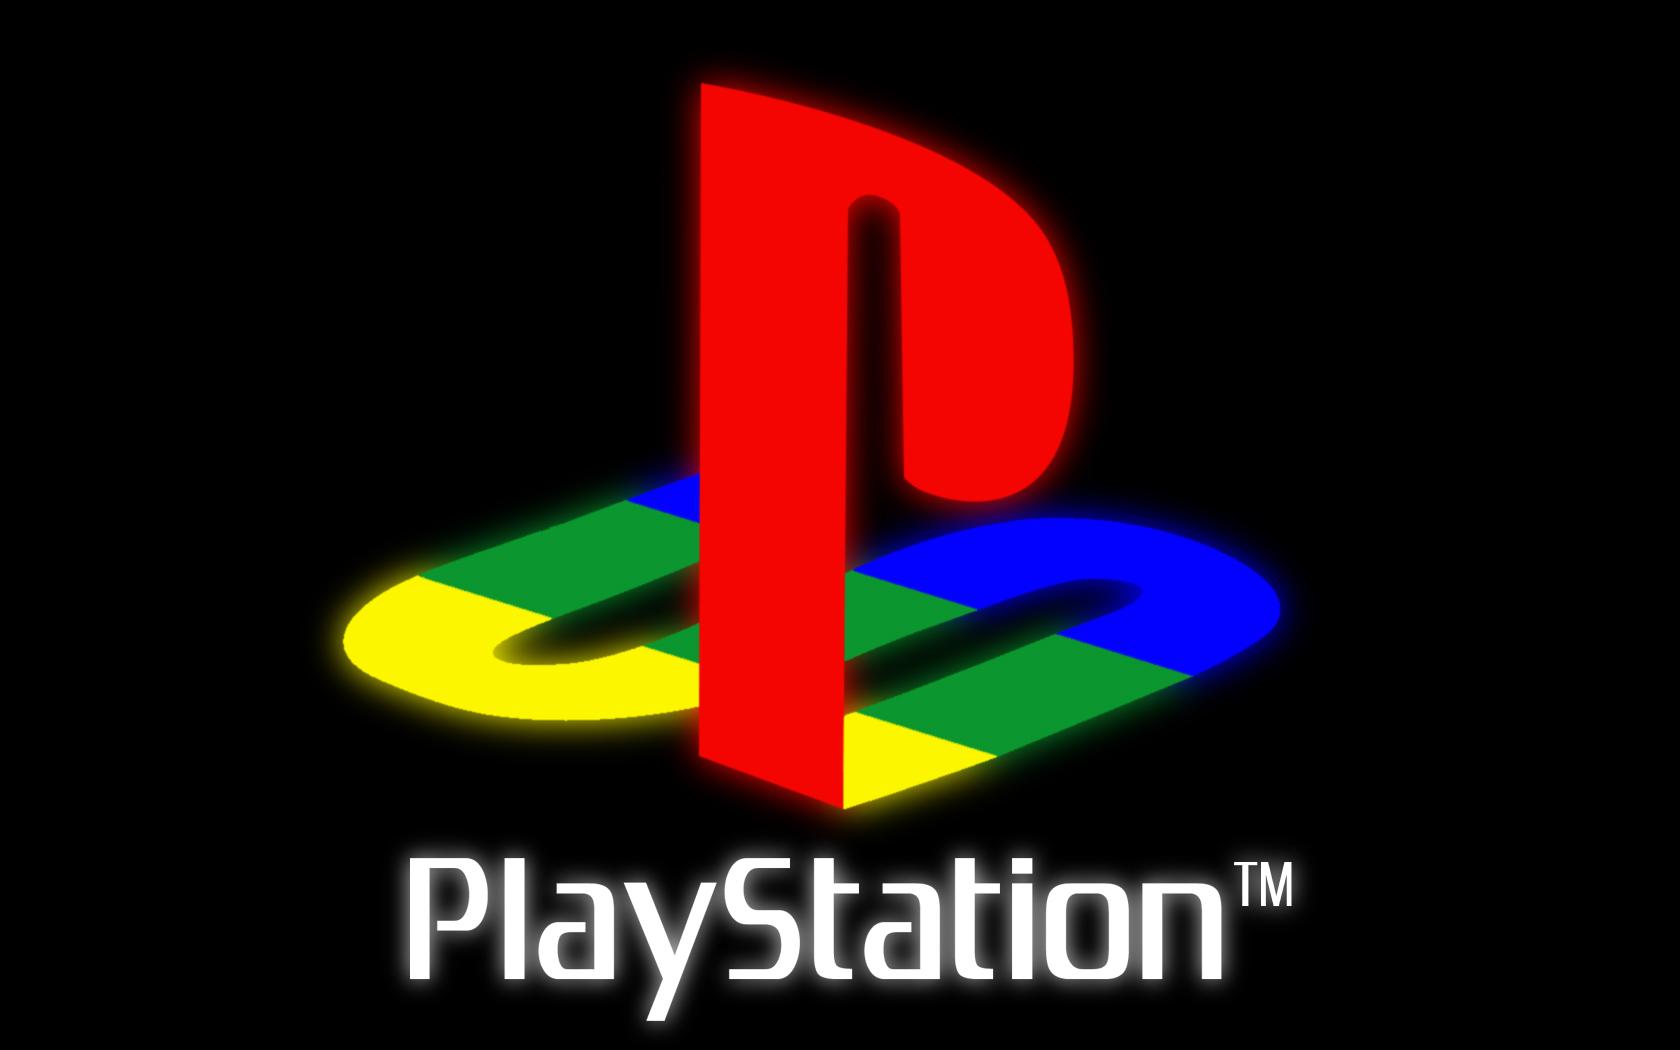 Free download PlayStation logos black background HD